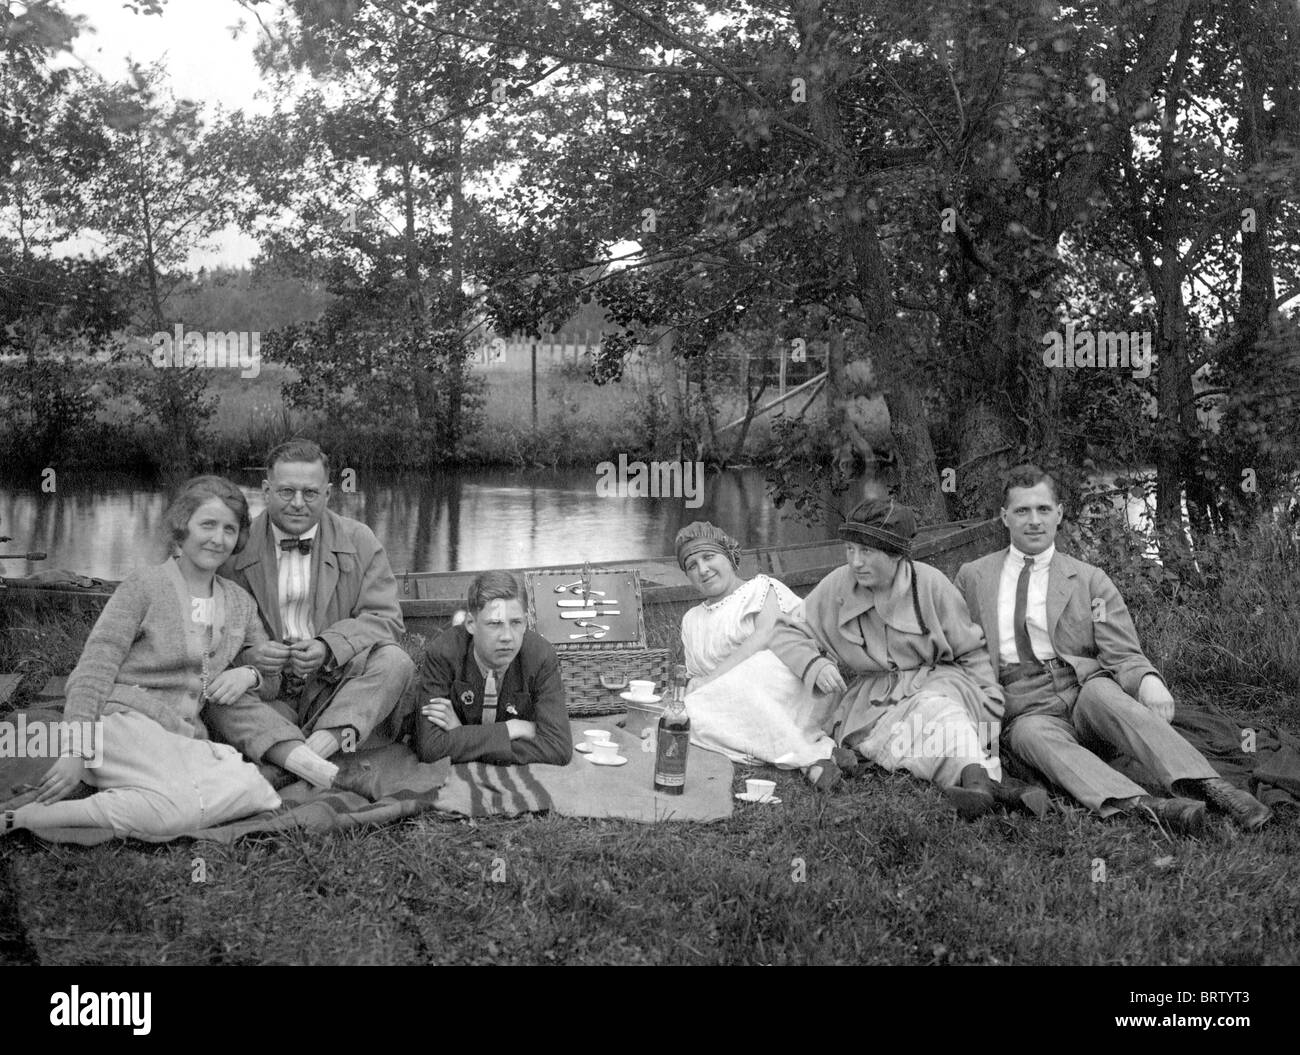 Grupo teniendo un picnic, imagen histórica, ca. 1920 Foto de stock